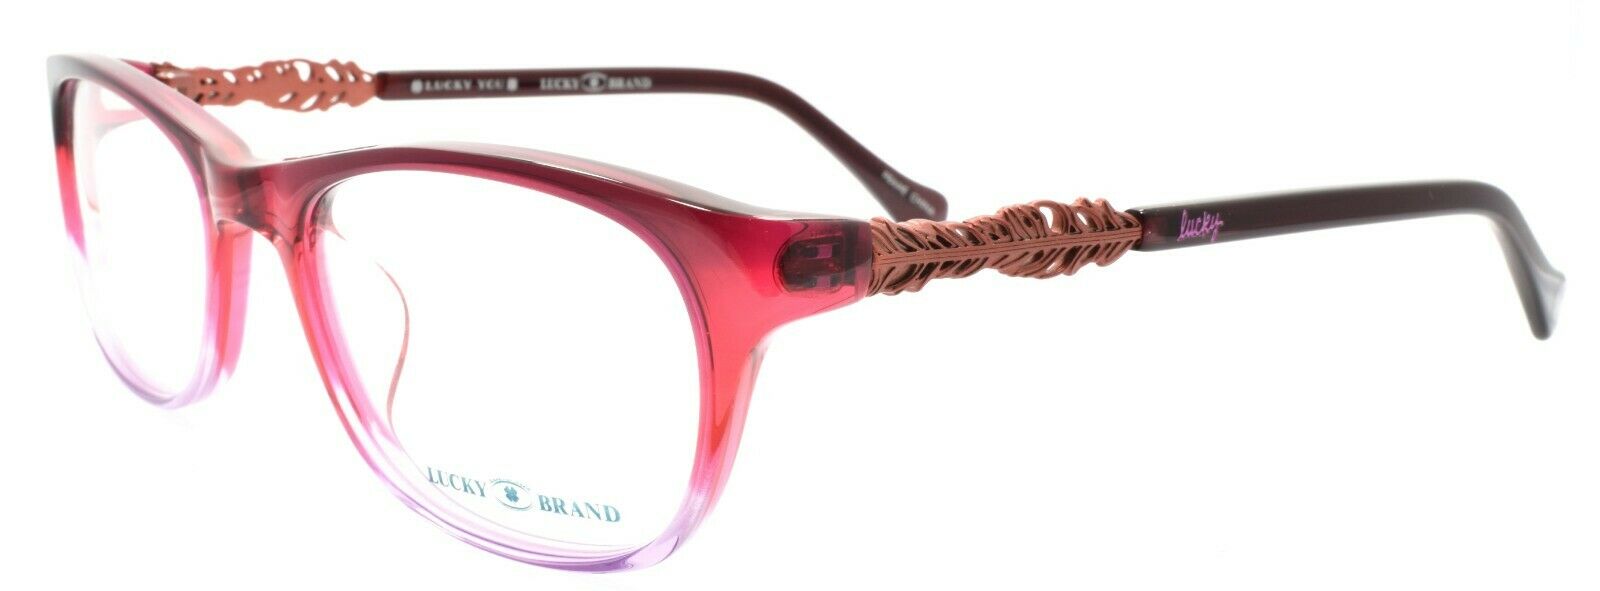 1-LUCKY BRAND Palm UF Women's Eyeglasses Frames 52-17-140 Raspberry + CASE-751286248265-IKSpecs